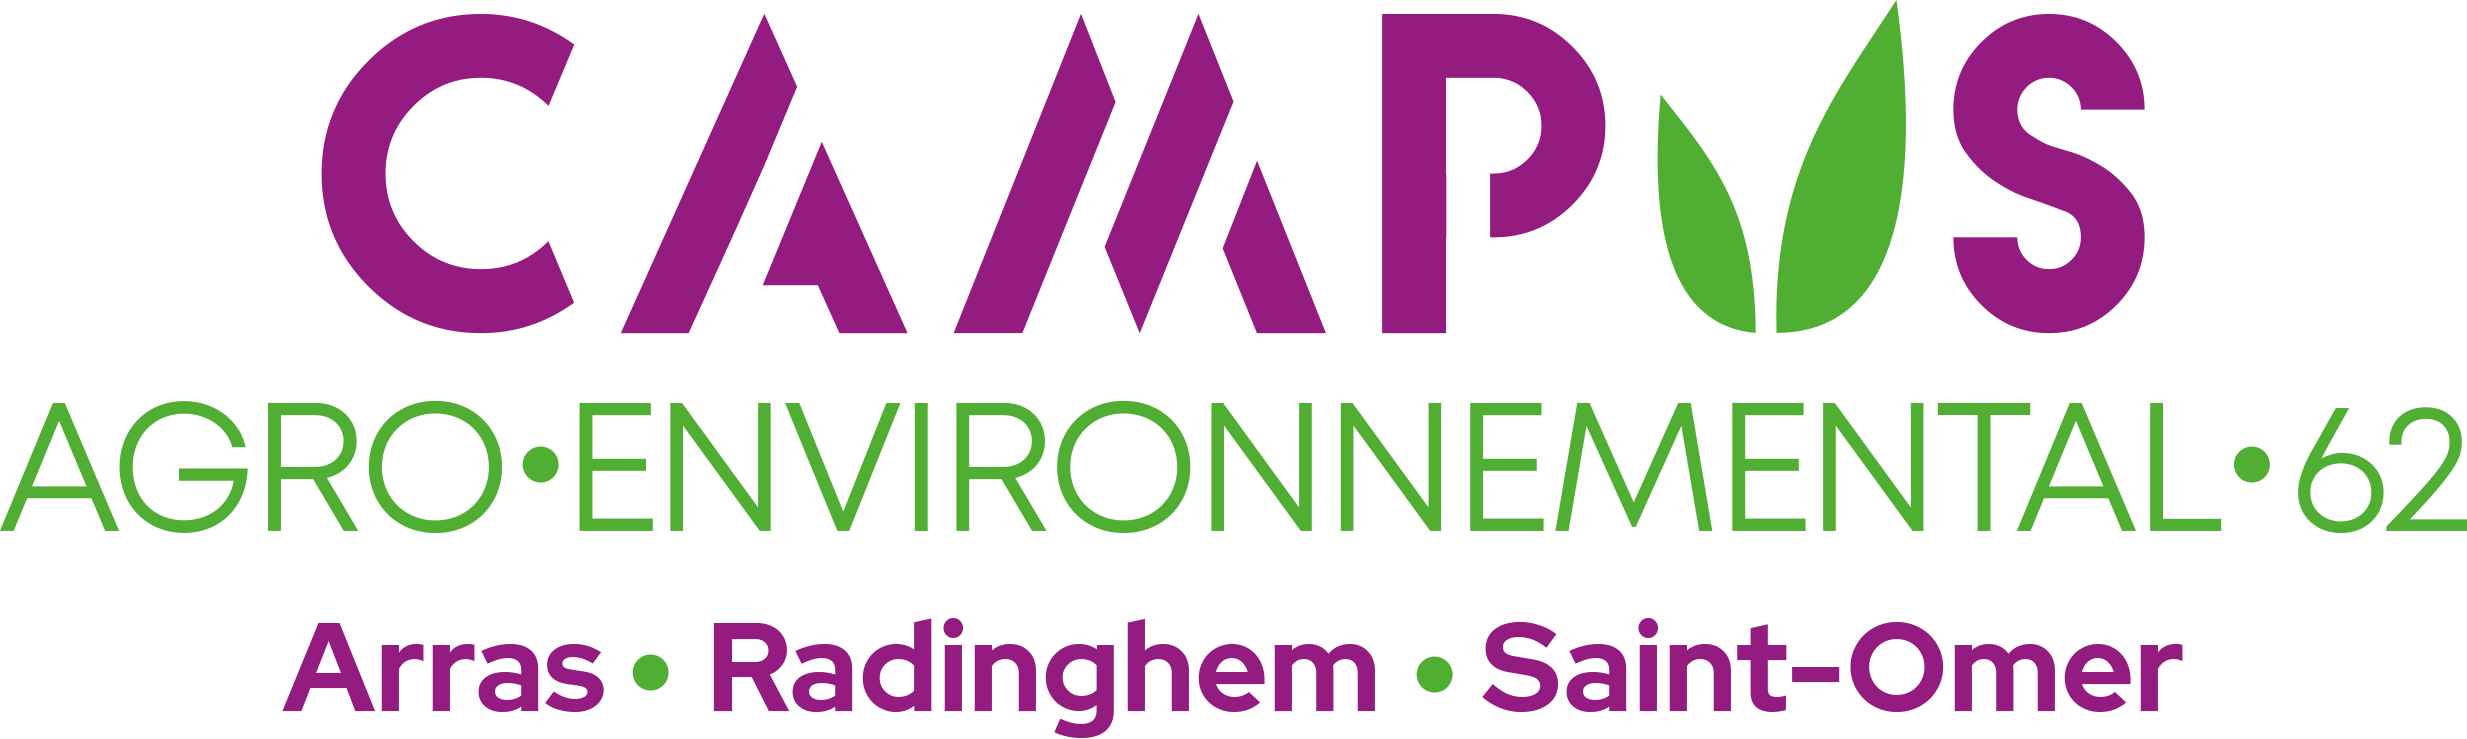 logo CFPPA/UFA du Campus agroenvironnemental 62